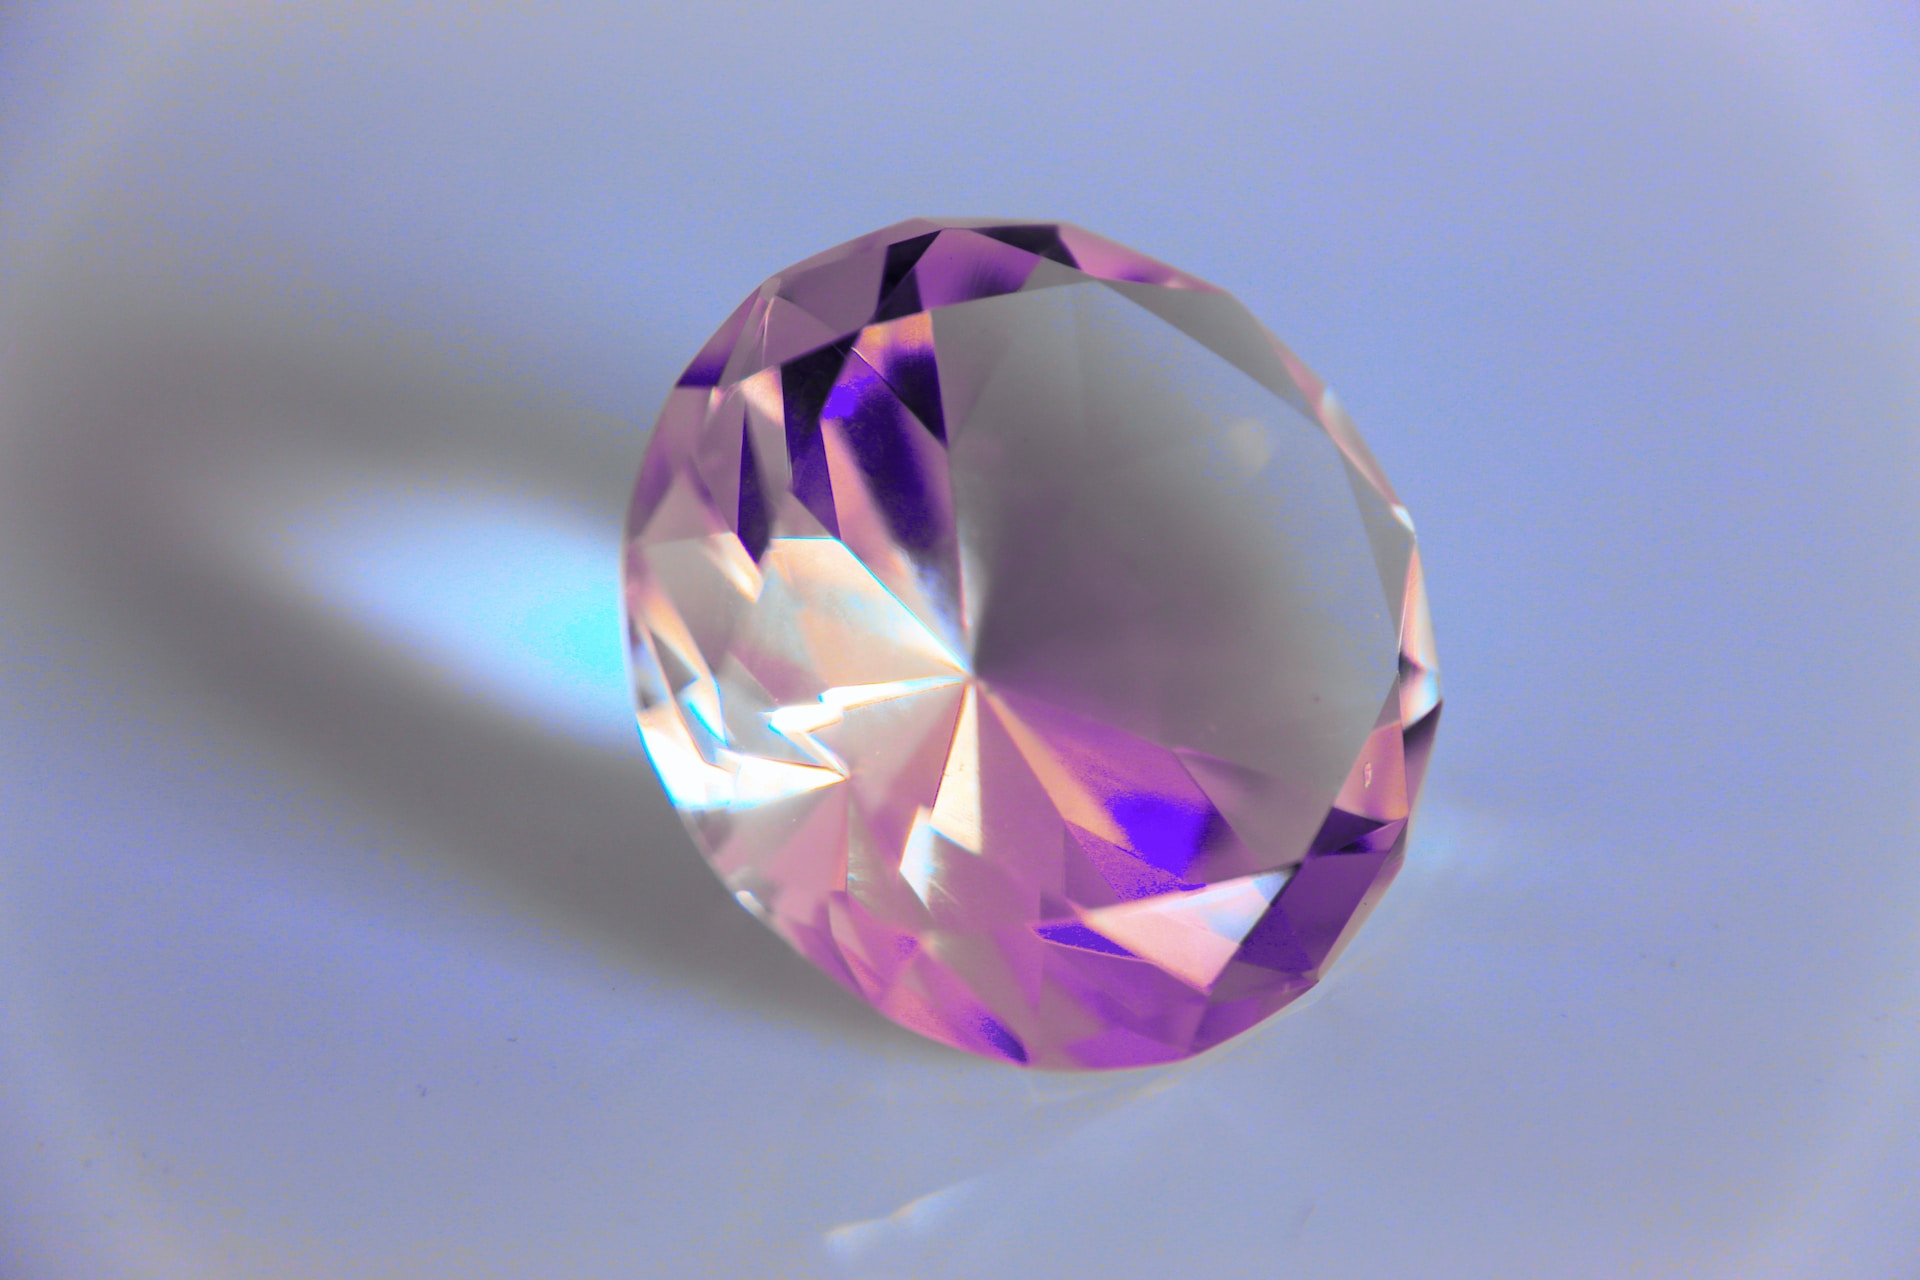 a pinkish-purple jewel sits on a light blue surface.